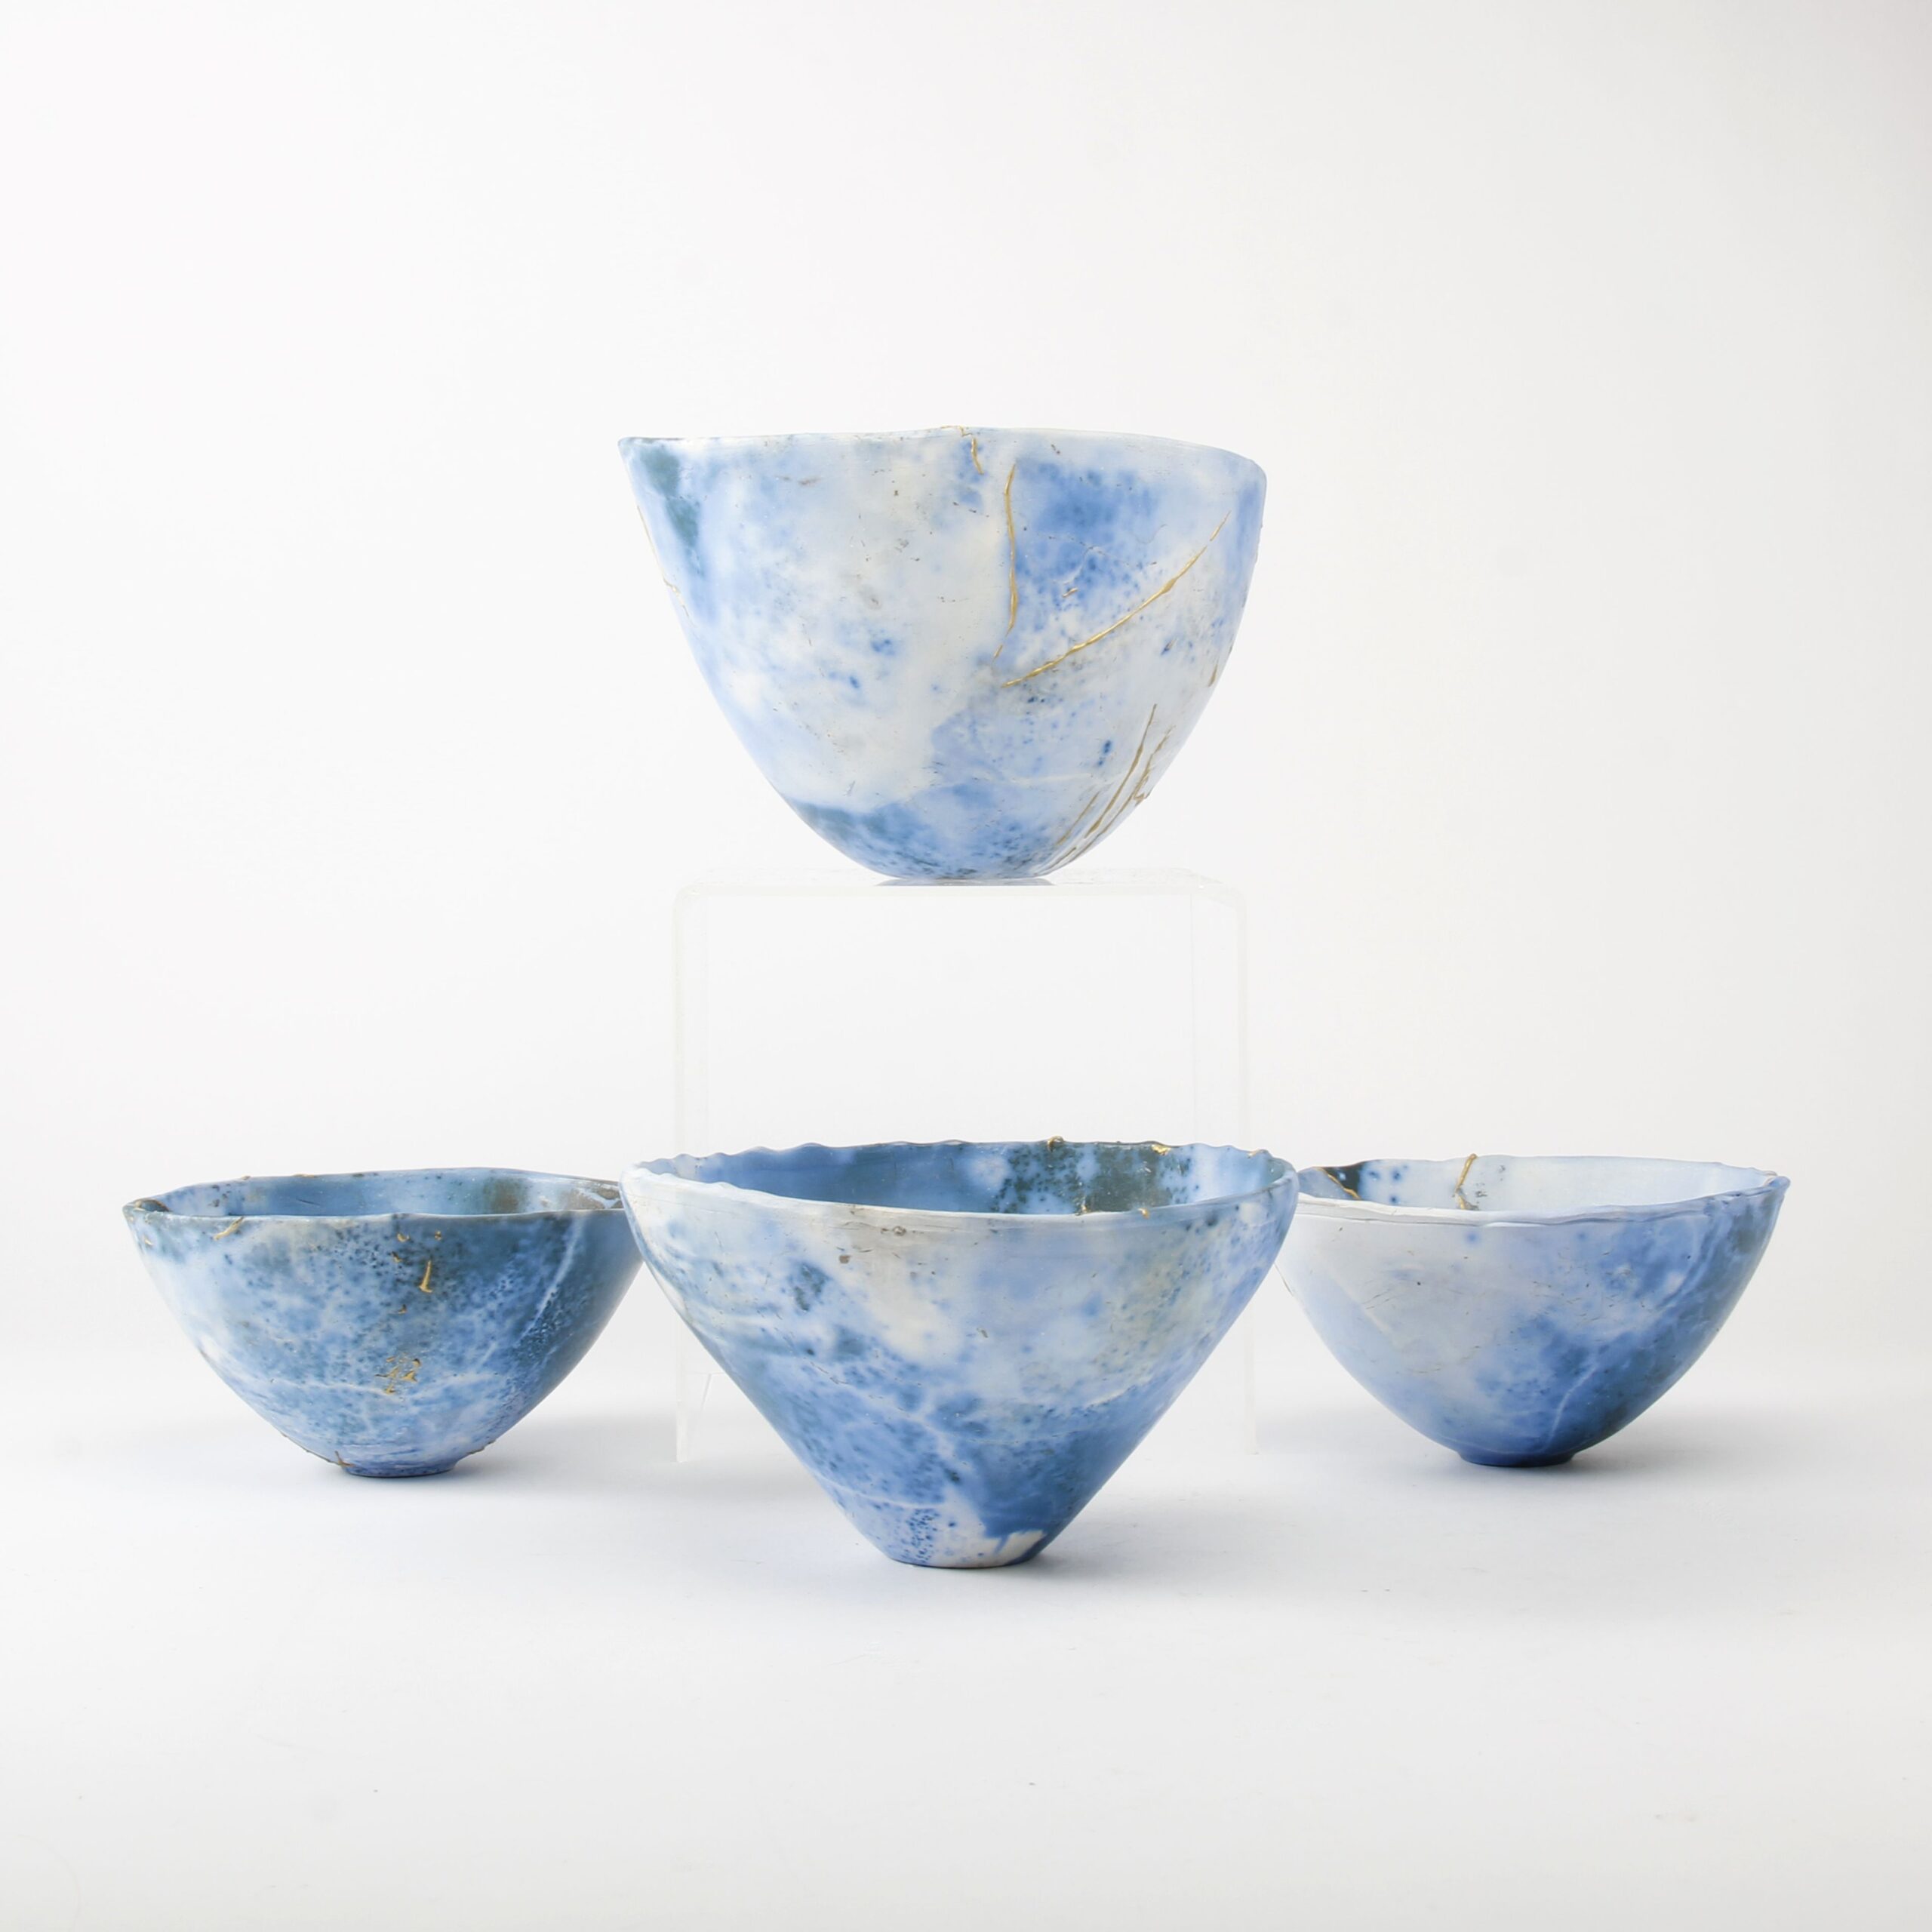 Alison Brannen: Medium Bowl Product Image 2 of 6